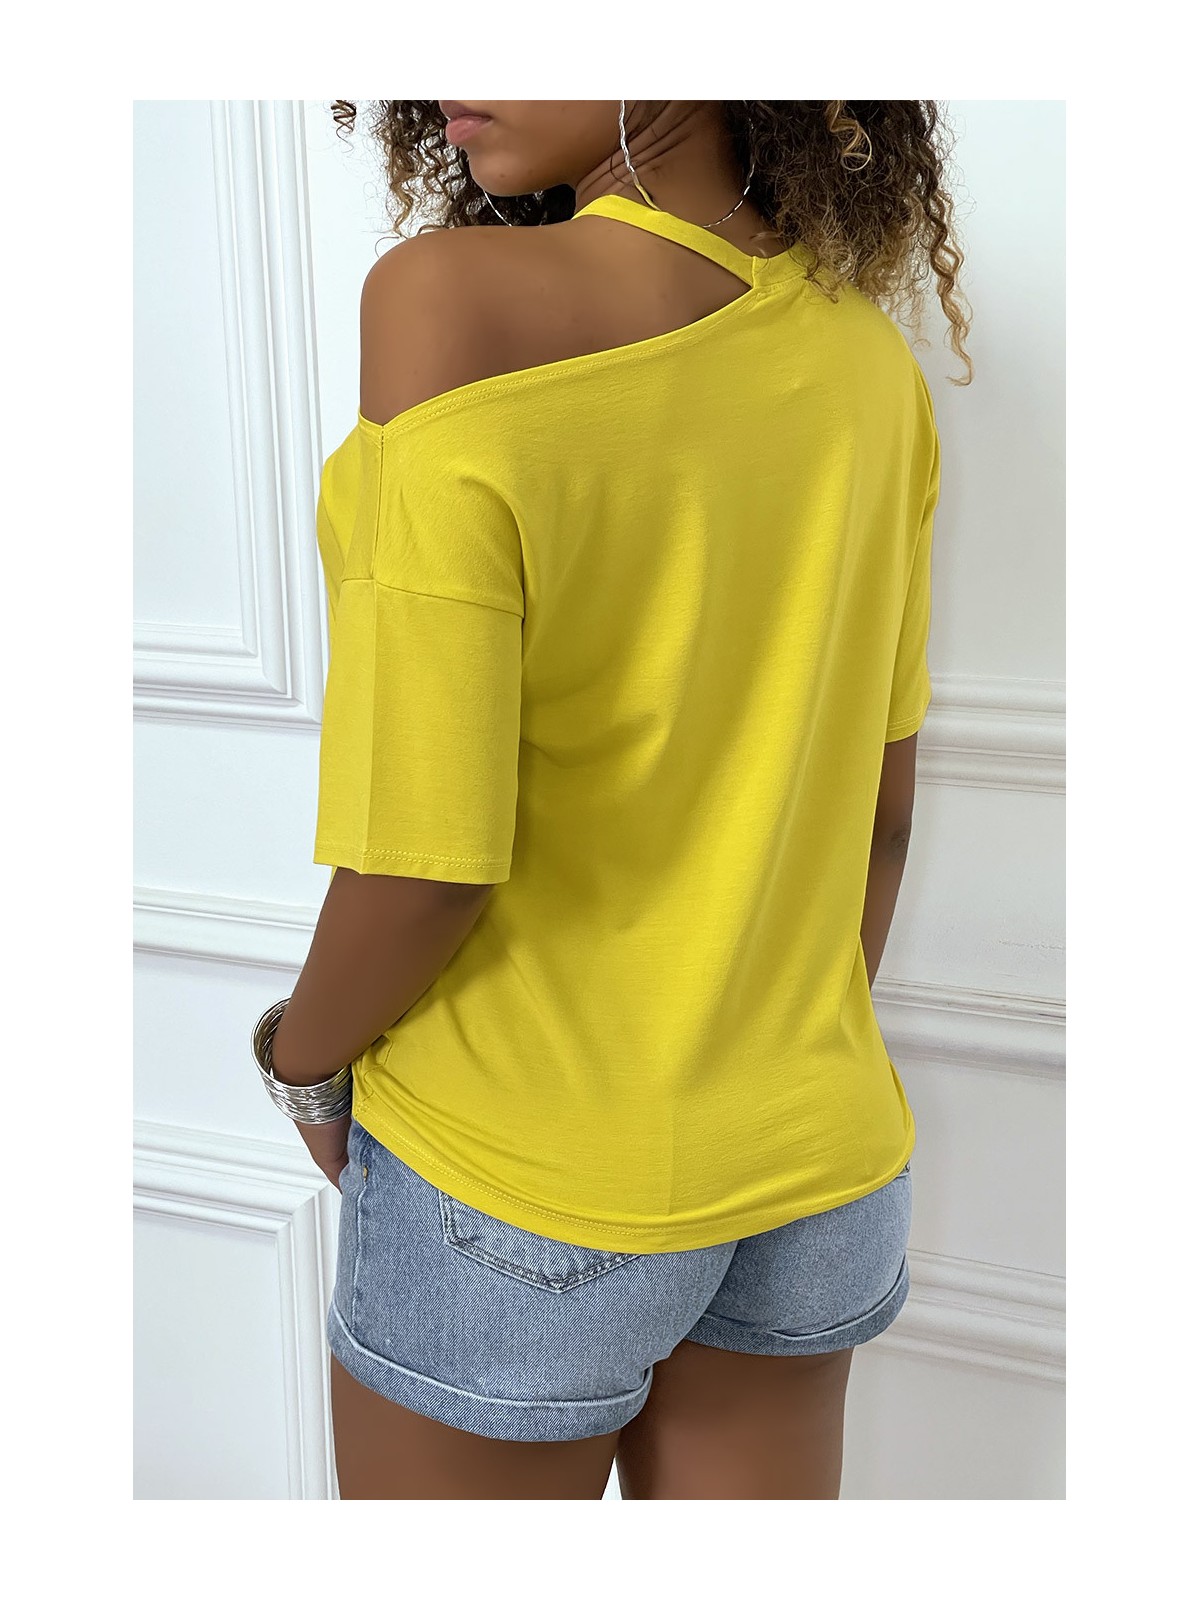 Tee-shirt jaune avec epaule denudé - 7